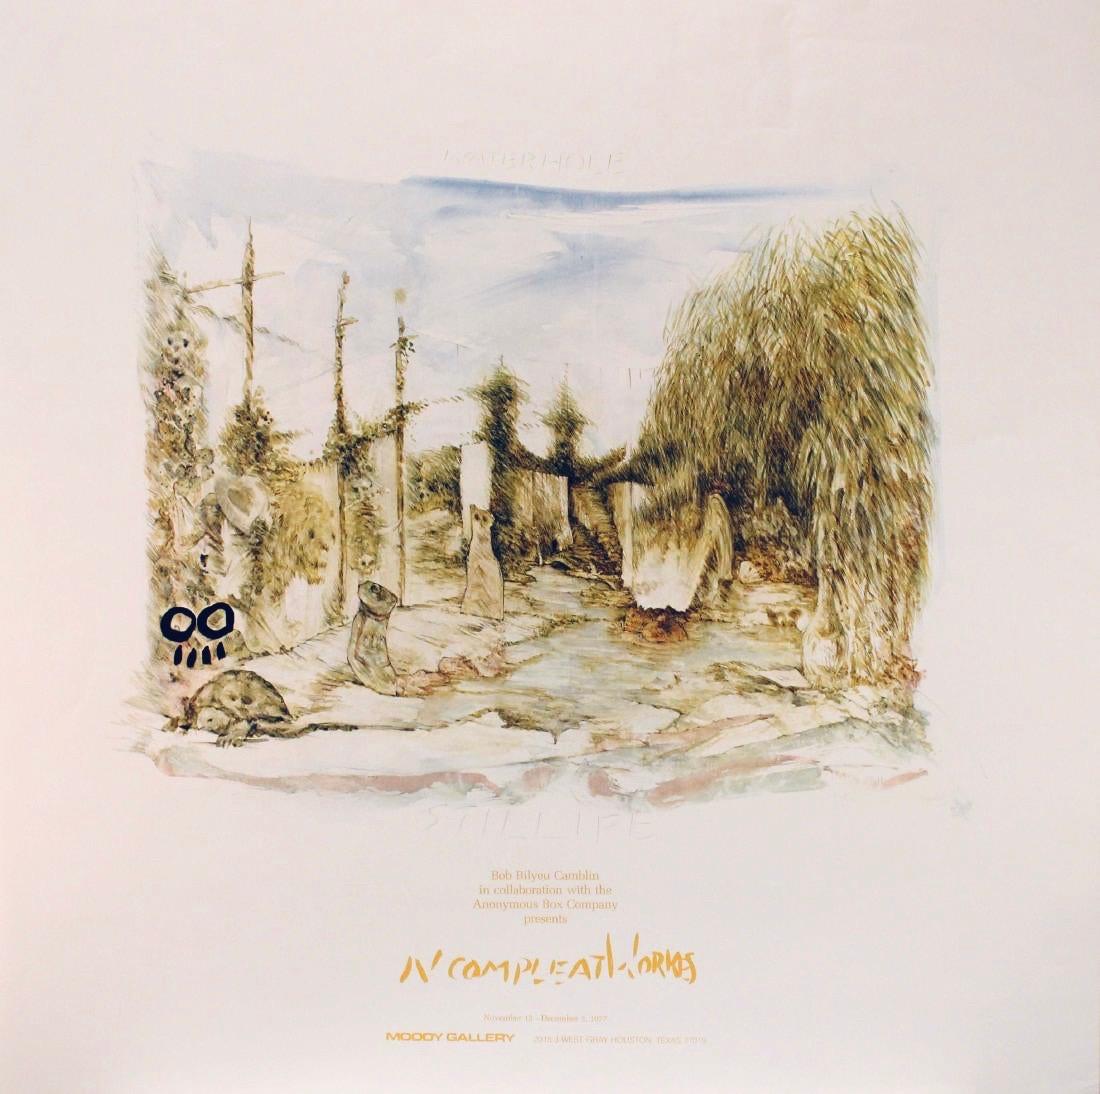 Bob Bilyeu Camblin Animal Print - Poster-N'Compleat Workes, Moody Gallery/Anonymous Box Company